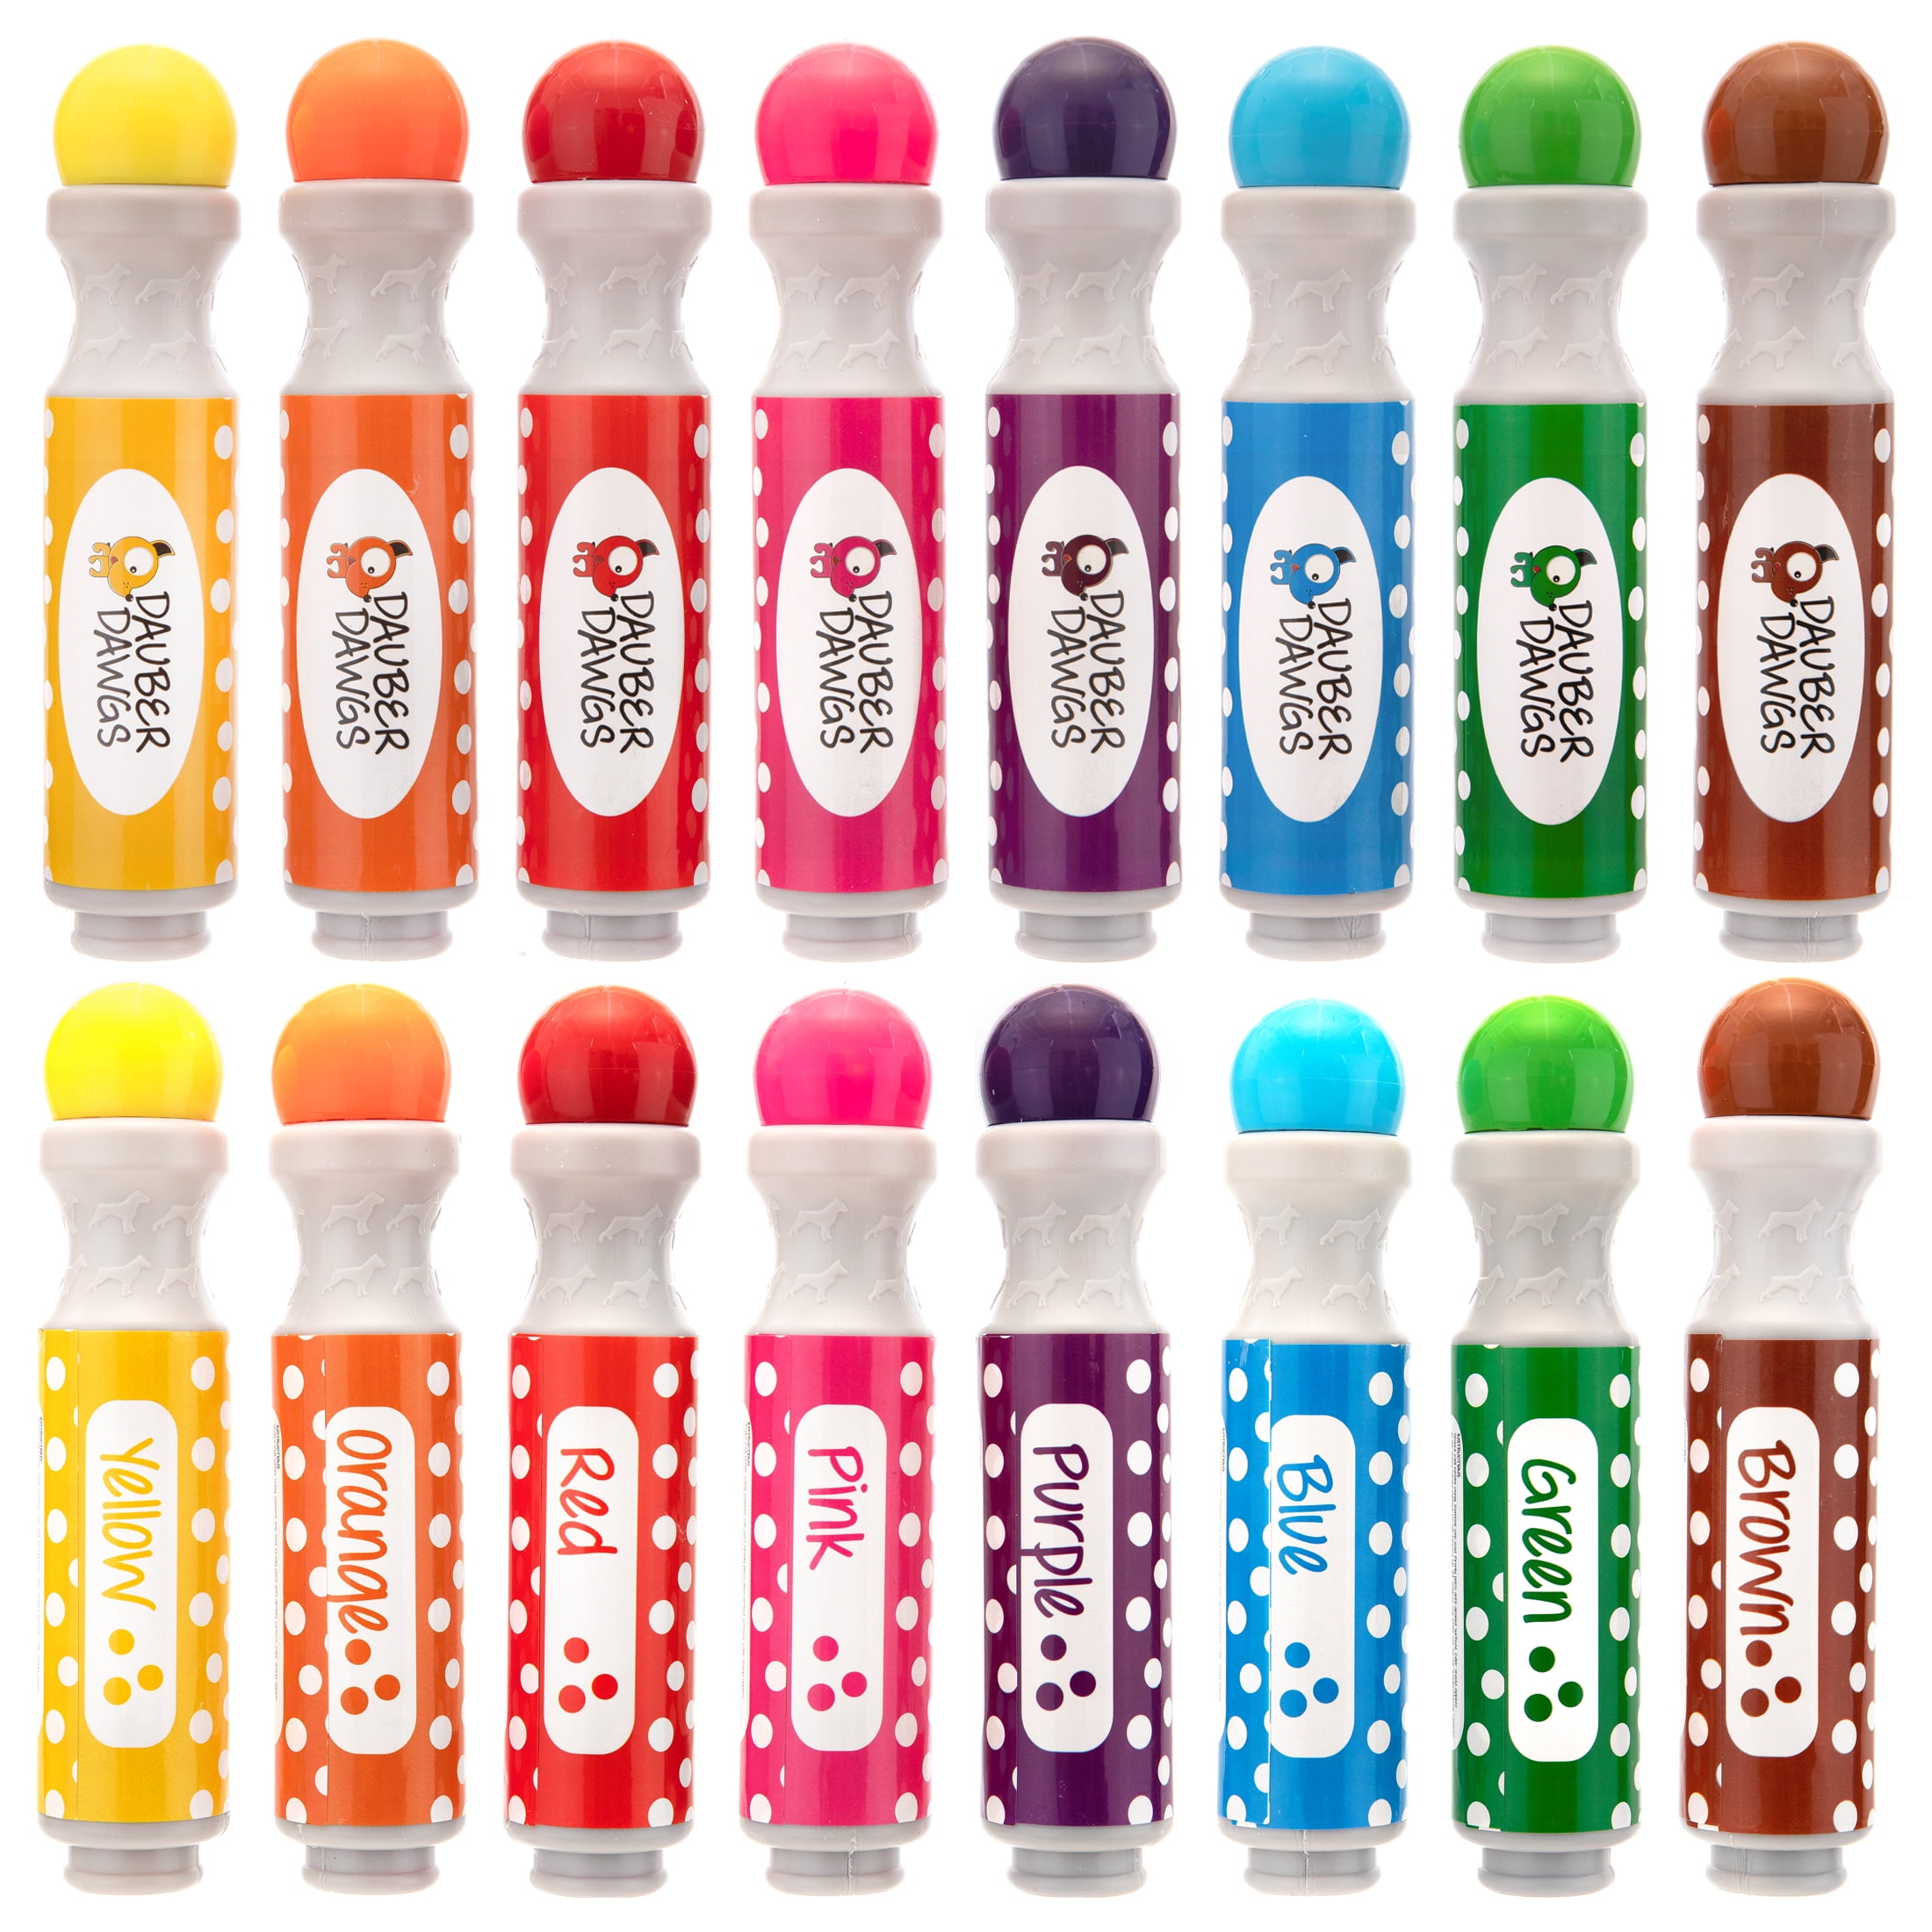 Ohuhu Washable Dot Markers for Toddler 8 Colors Bingo Daubers 40